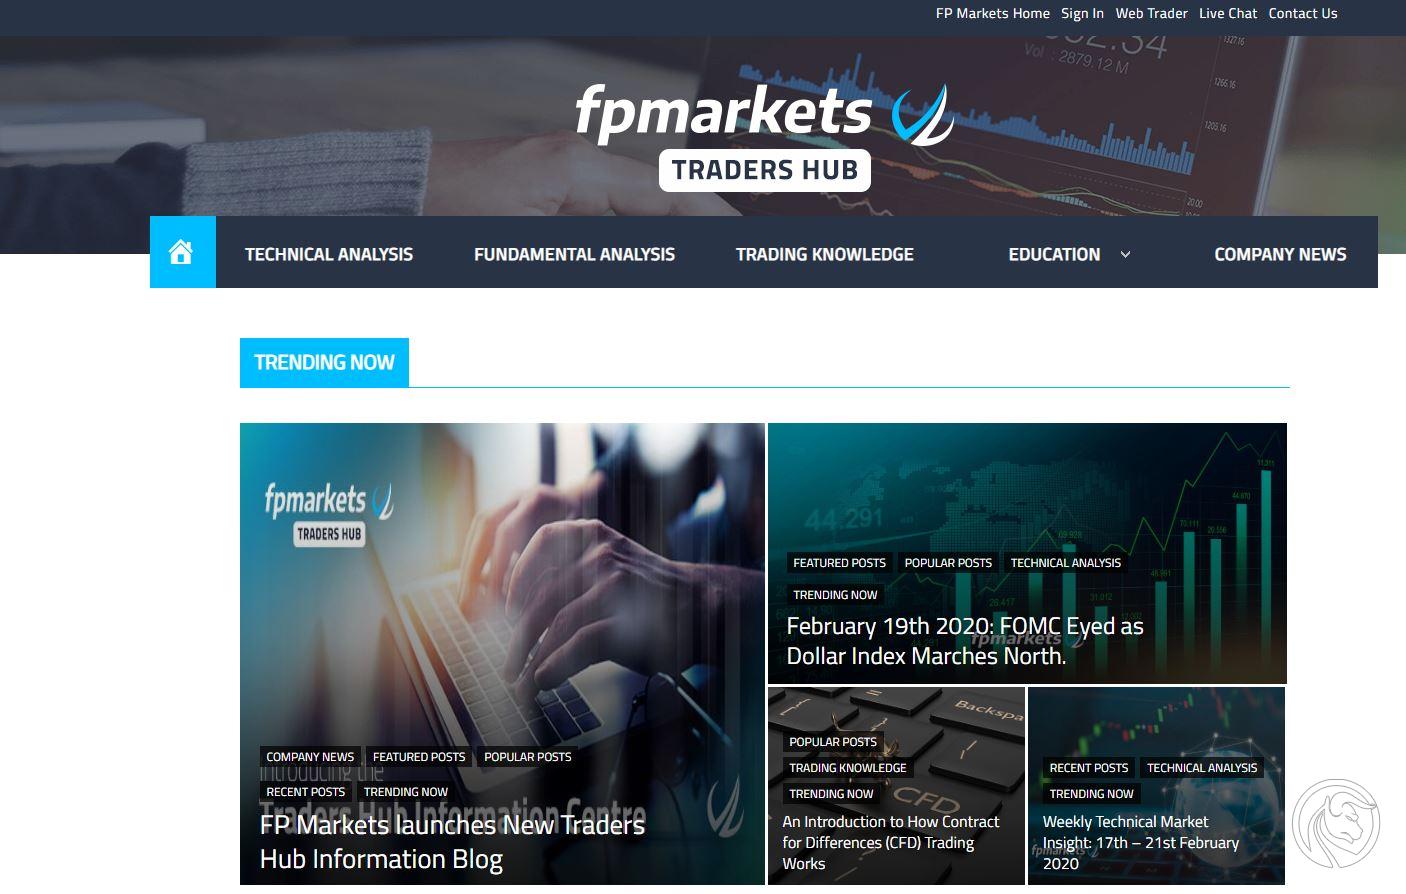 fp market traders hub